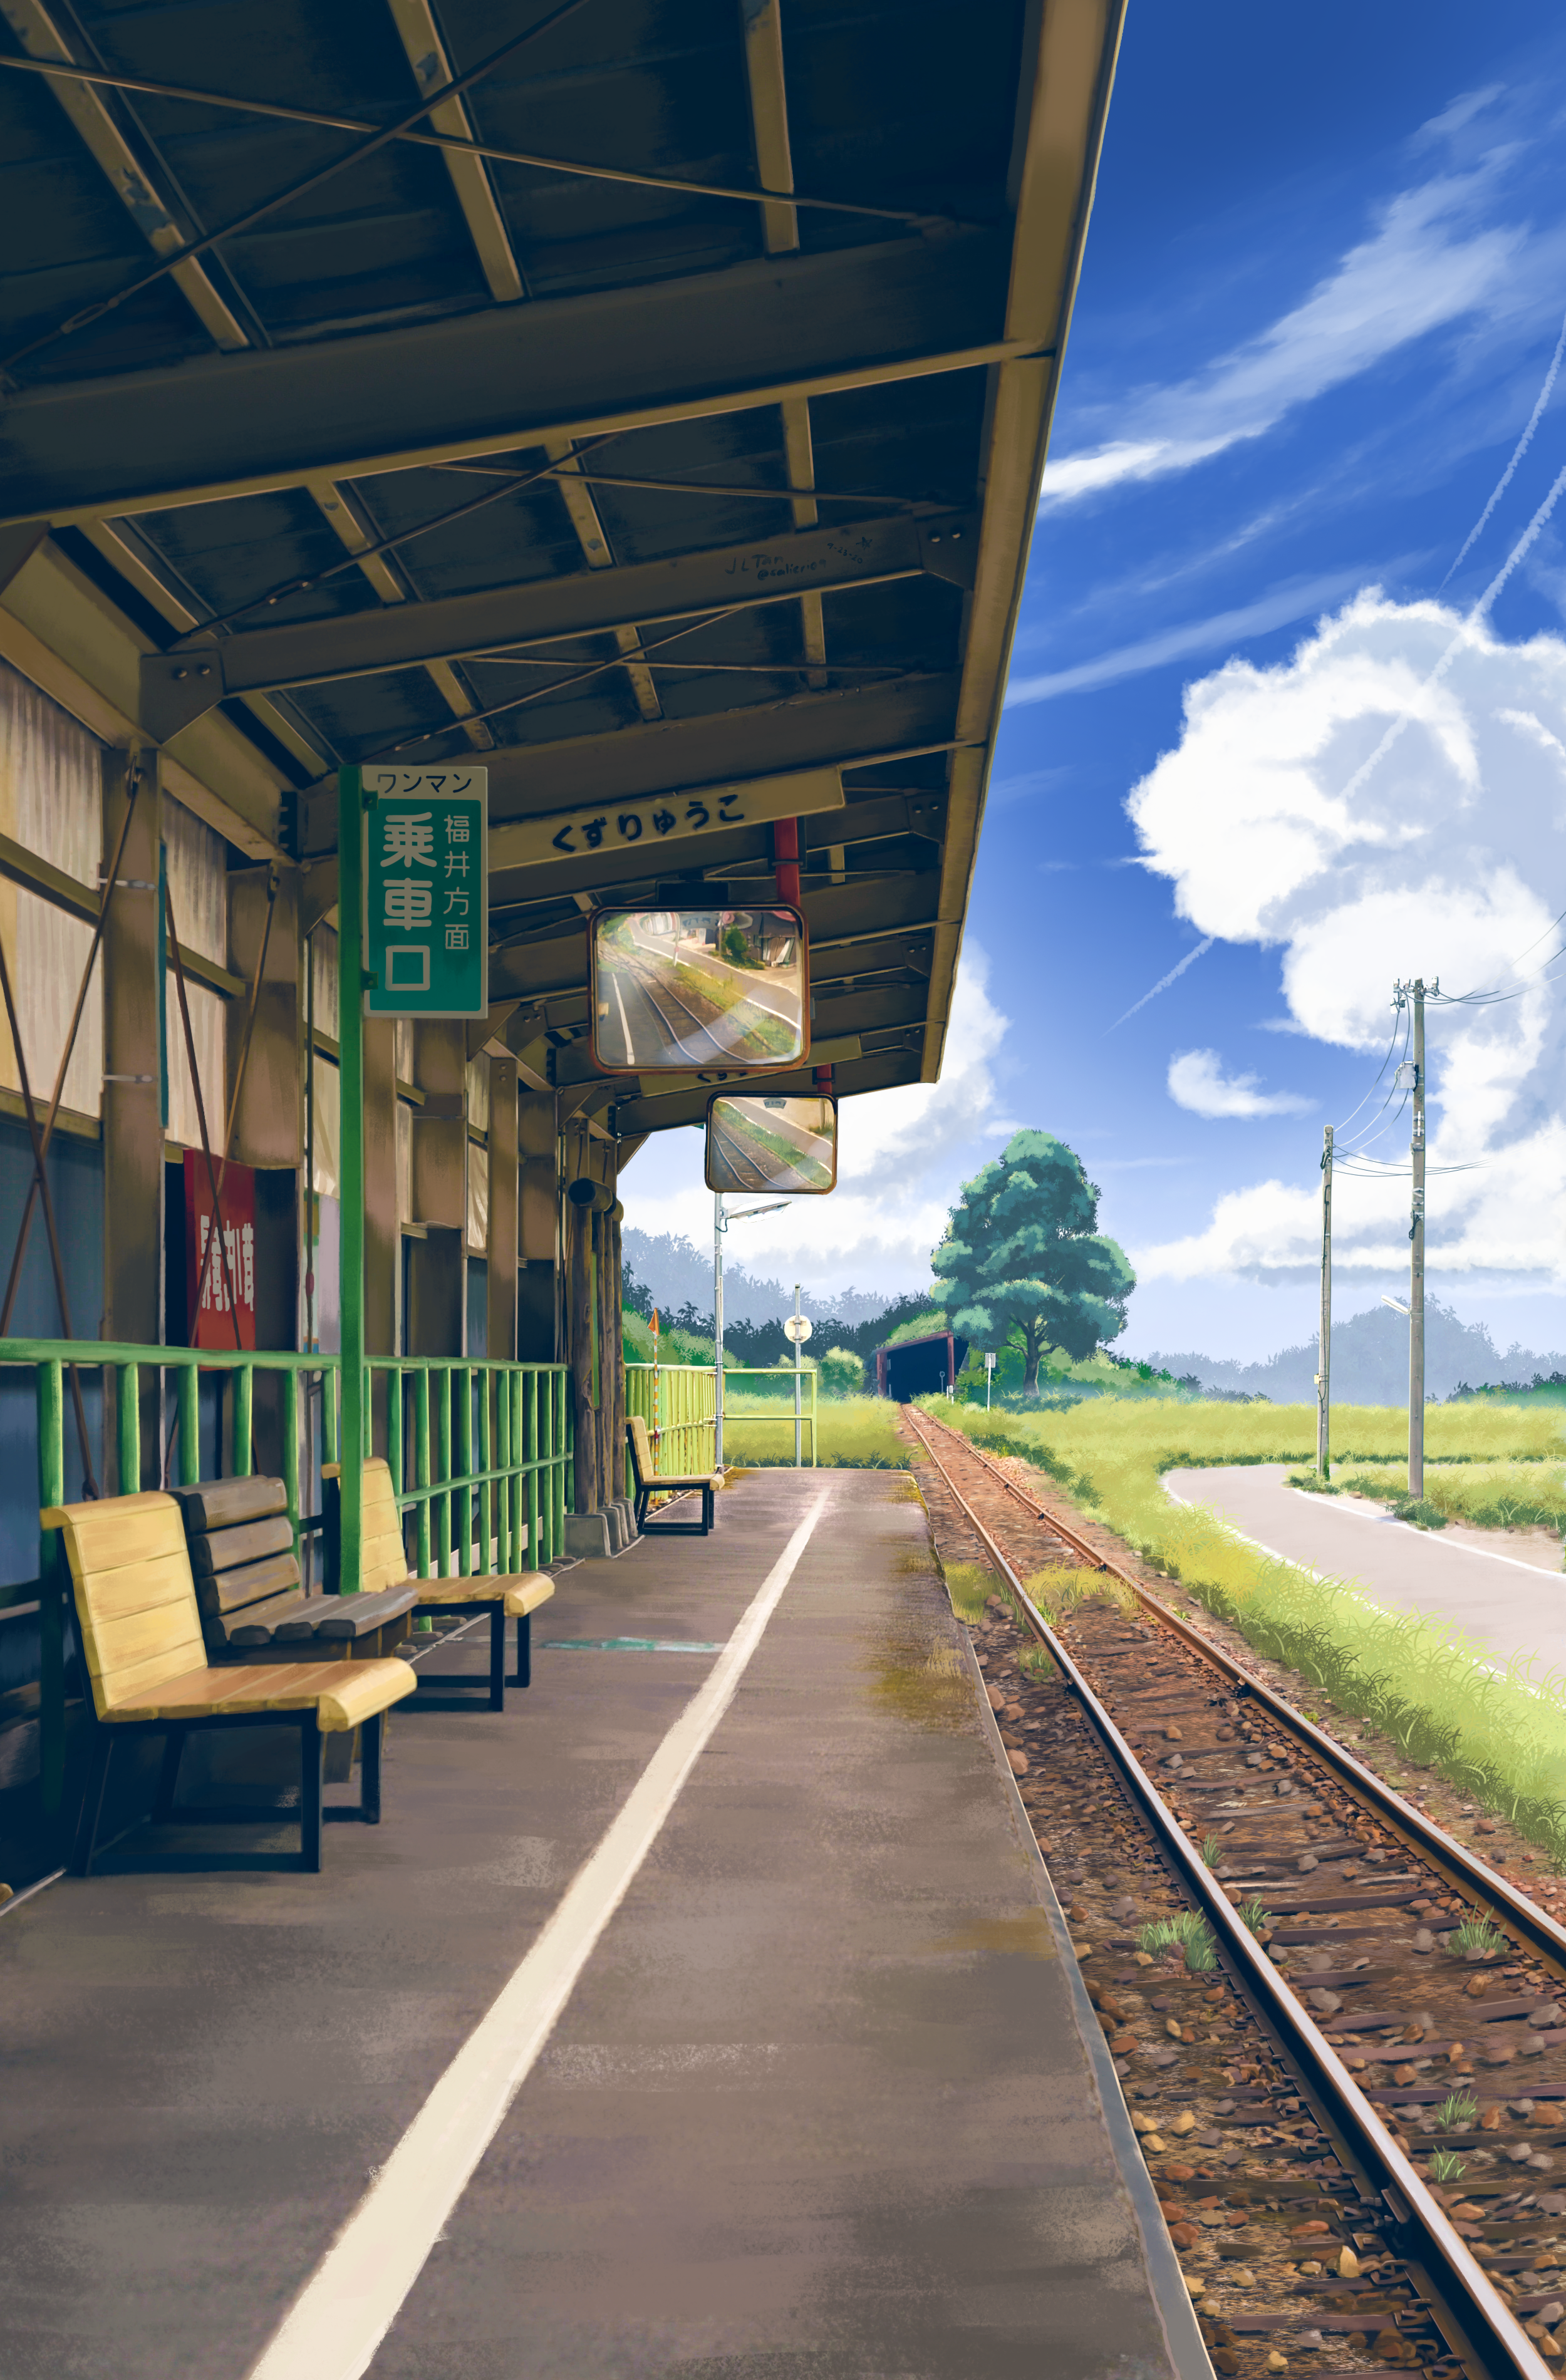 Train Station插画图片壁纸